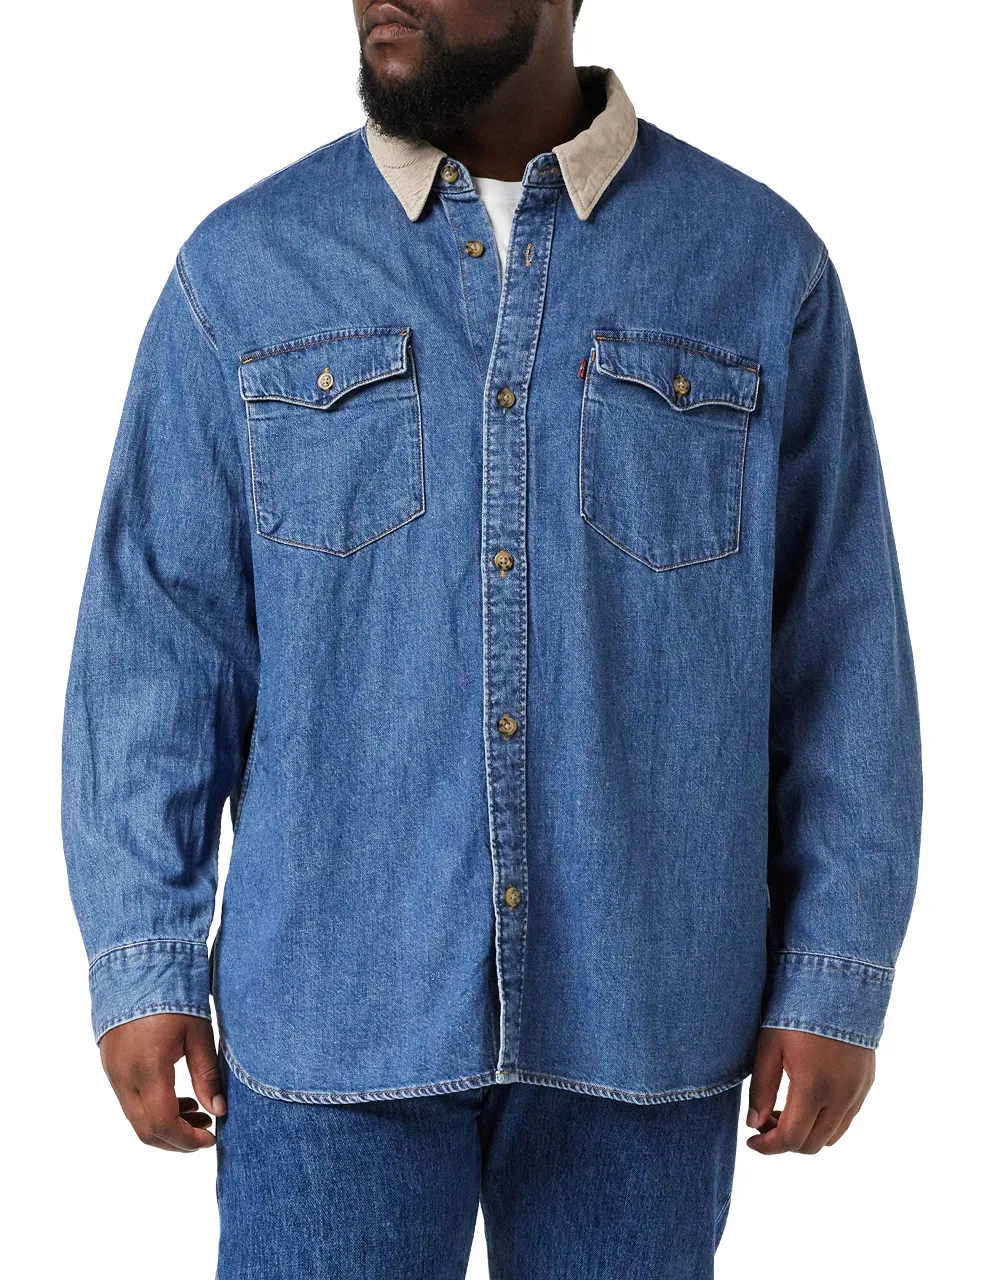 Levi's Men's Relaxed Fit Western Shirt Blue Stonewash (Blue)